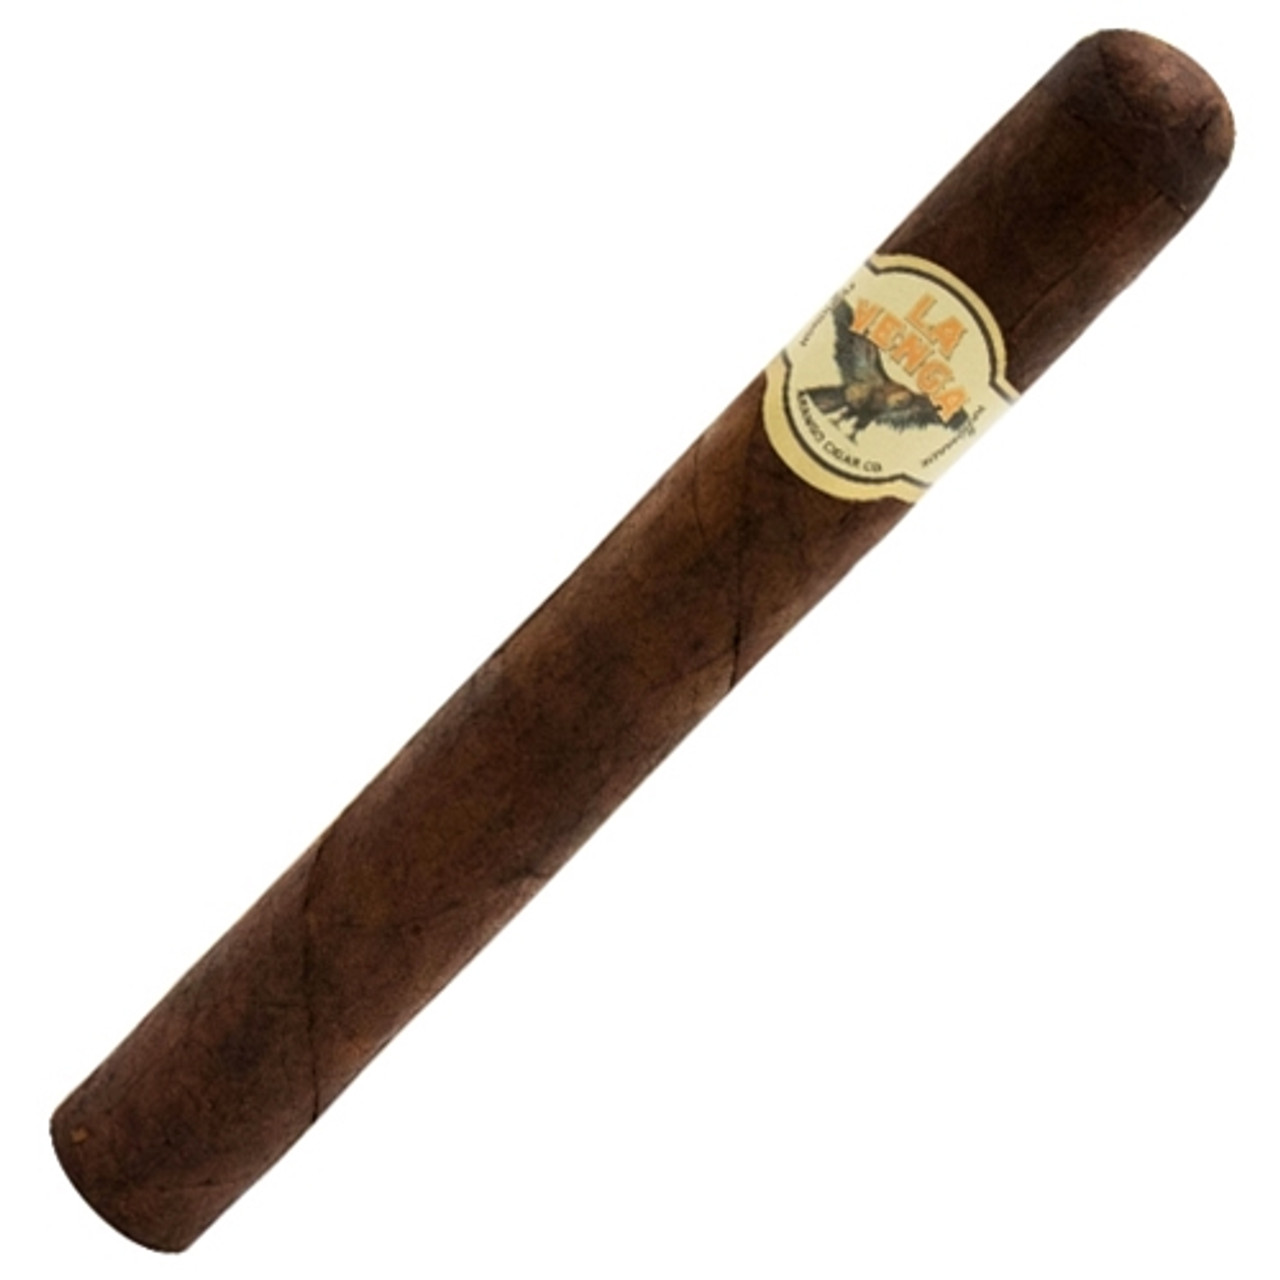 La Venga No. 59 Maduro Cigars - 7.25 x 54 Single